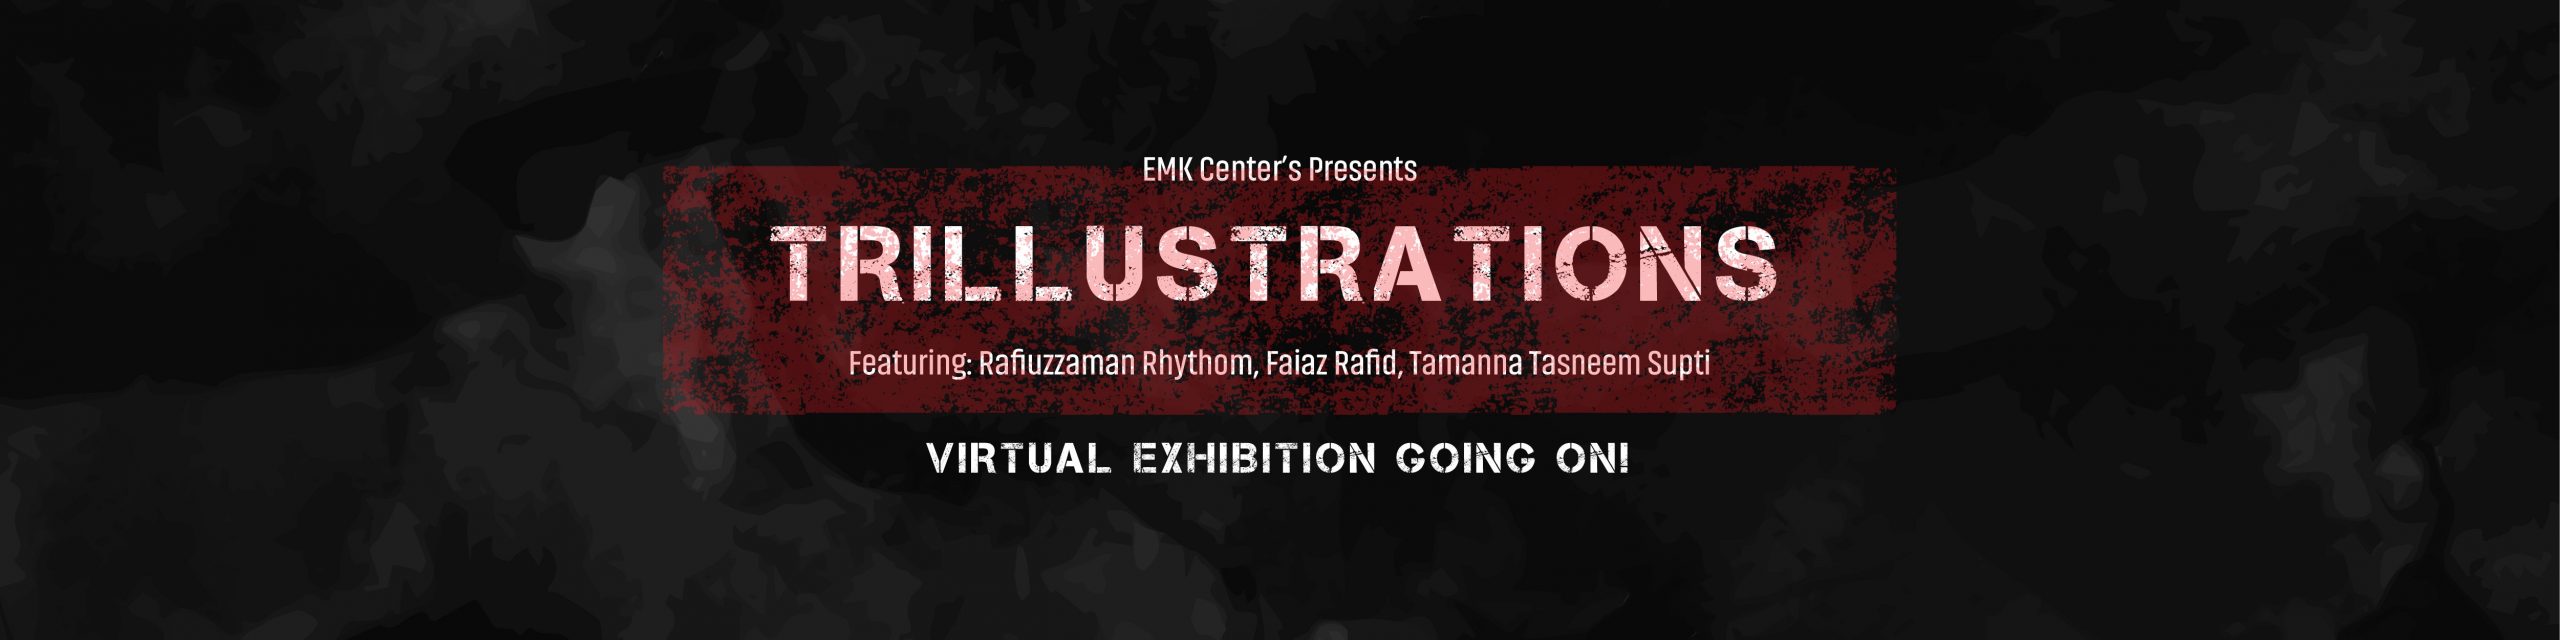 TRILLUSTRATIONS | Virtual Exhibition